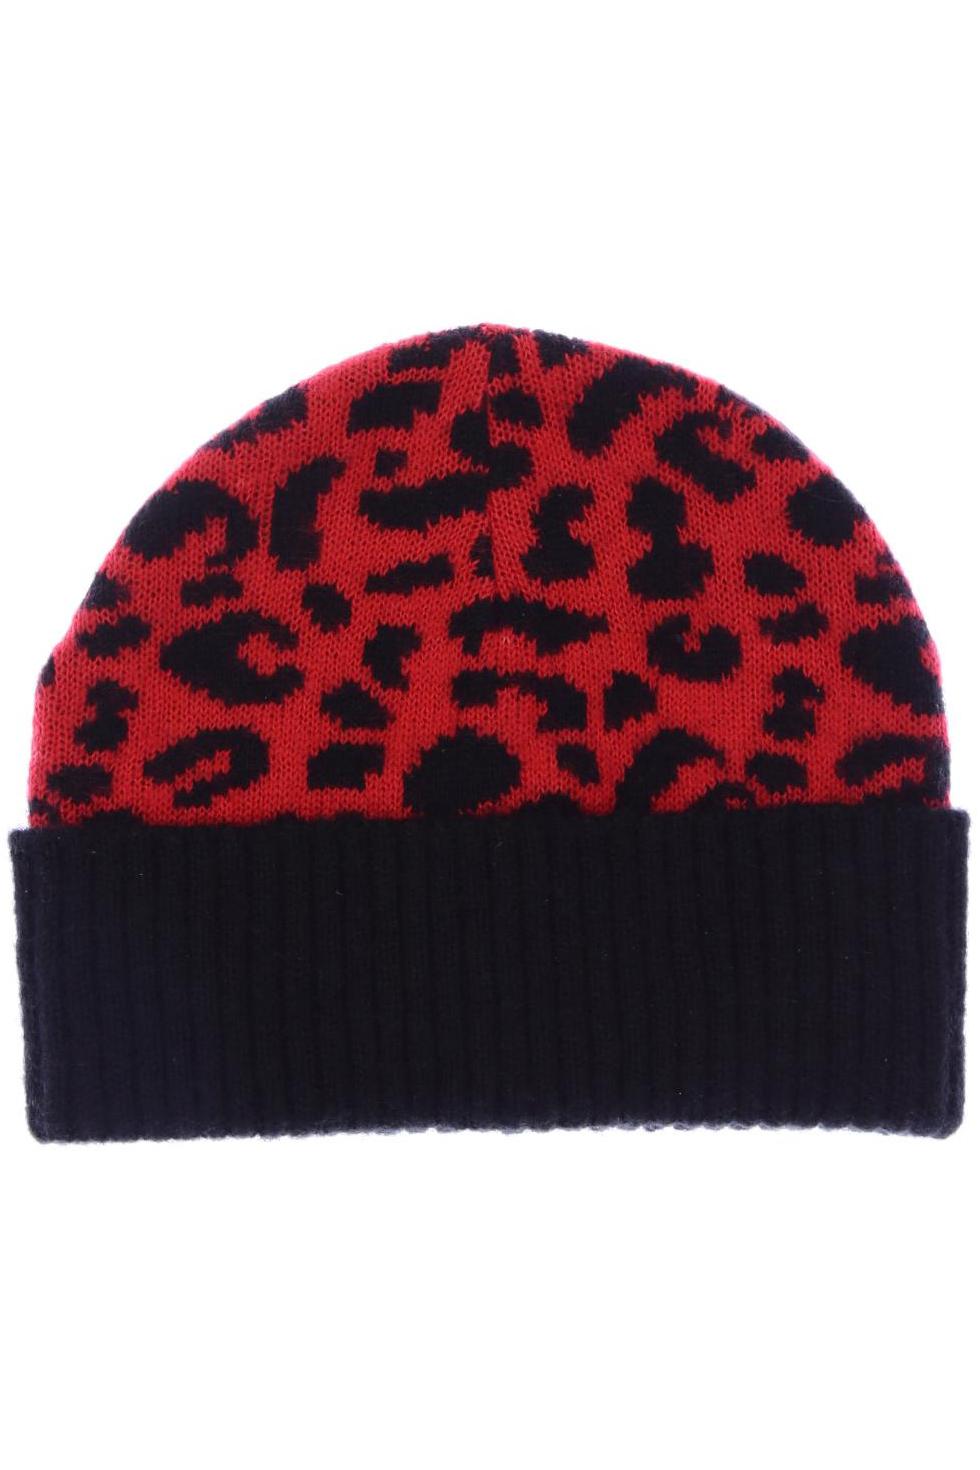 Codello Damen Hut/Mütze, rot von Codello